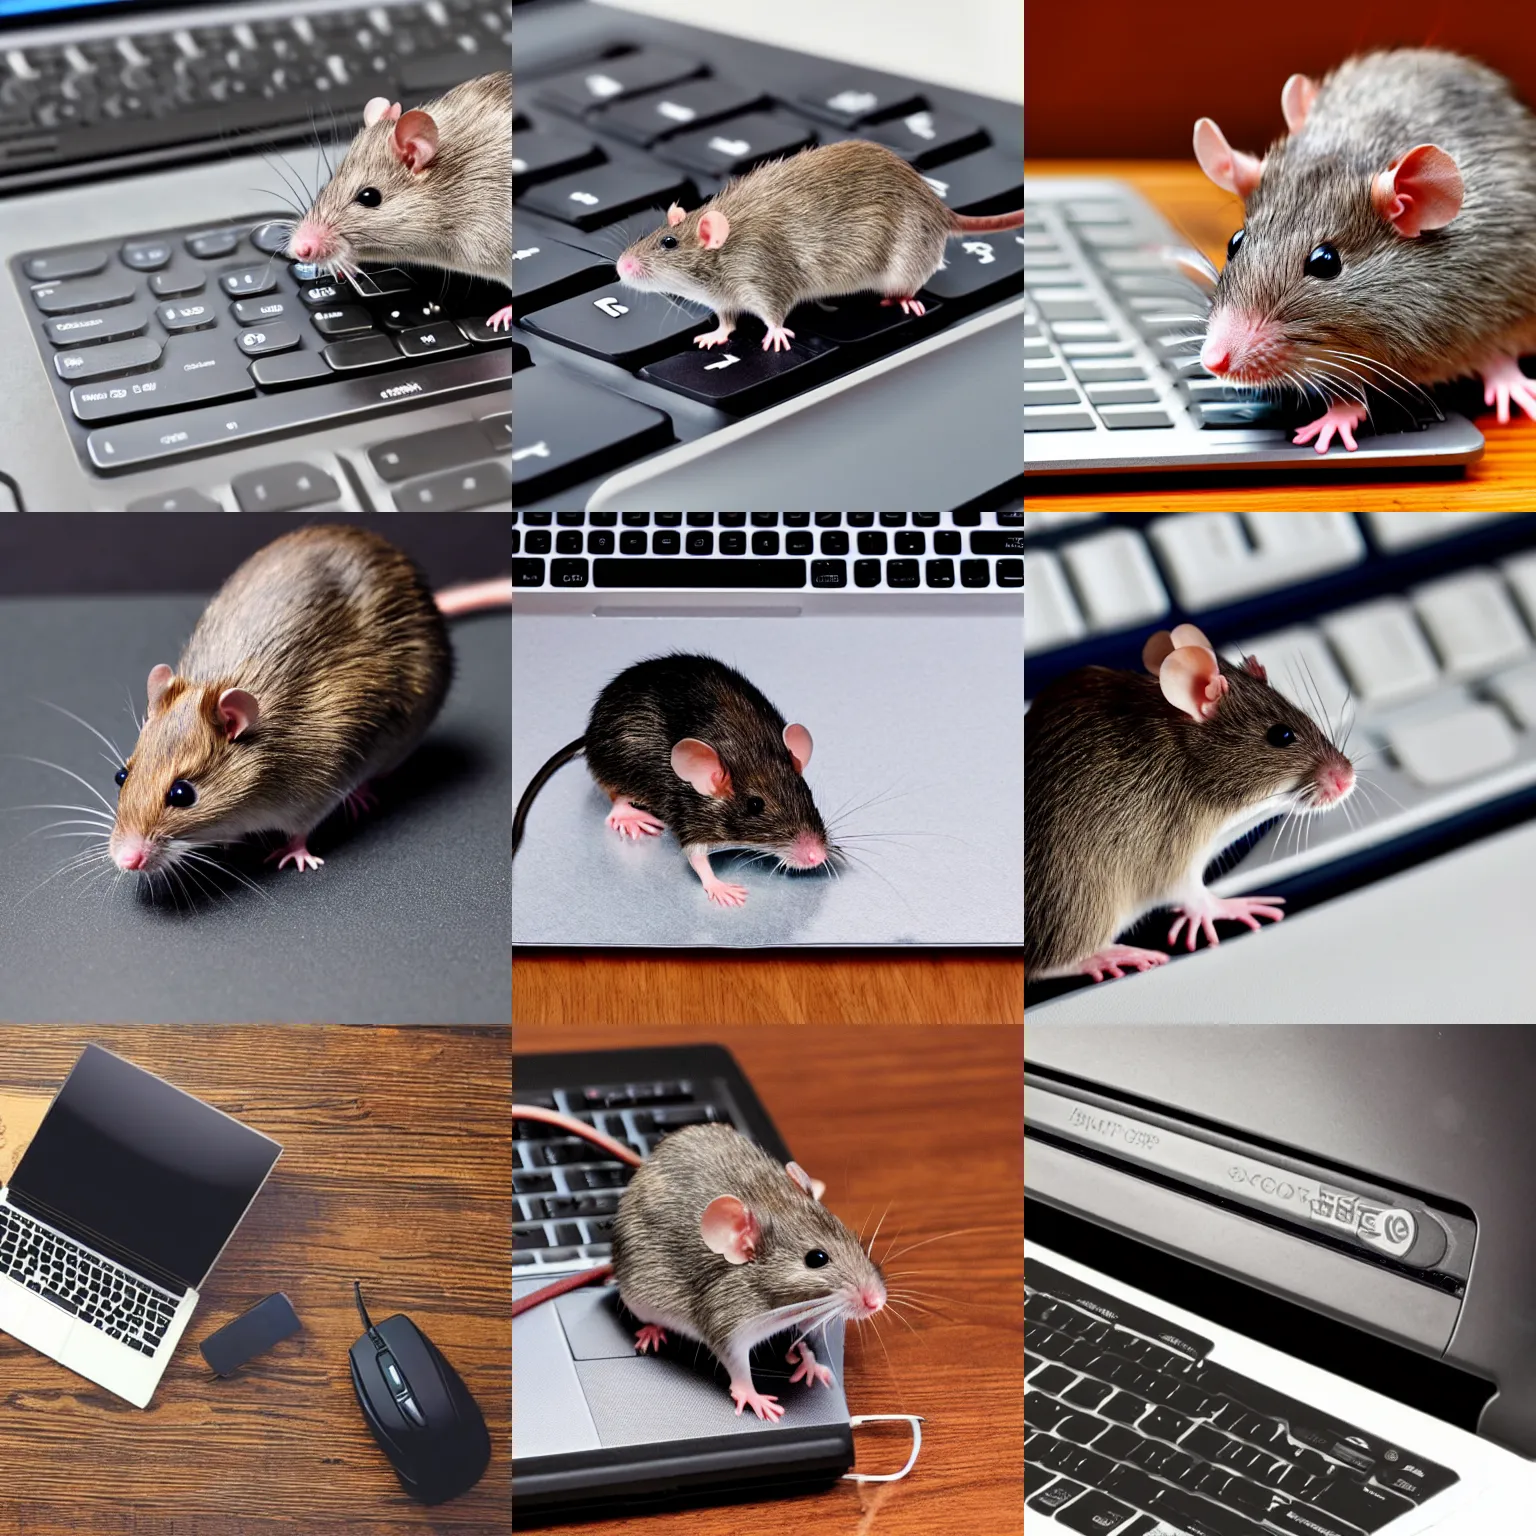 Prompt: rat on desktop computer keyboard